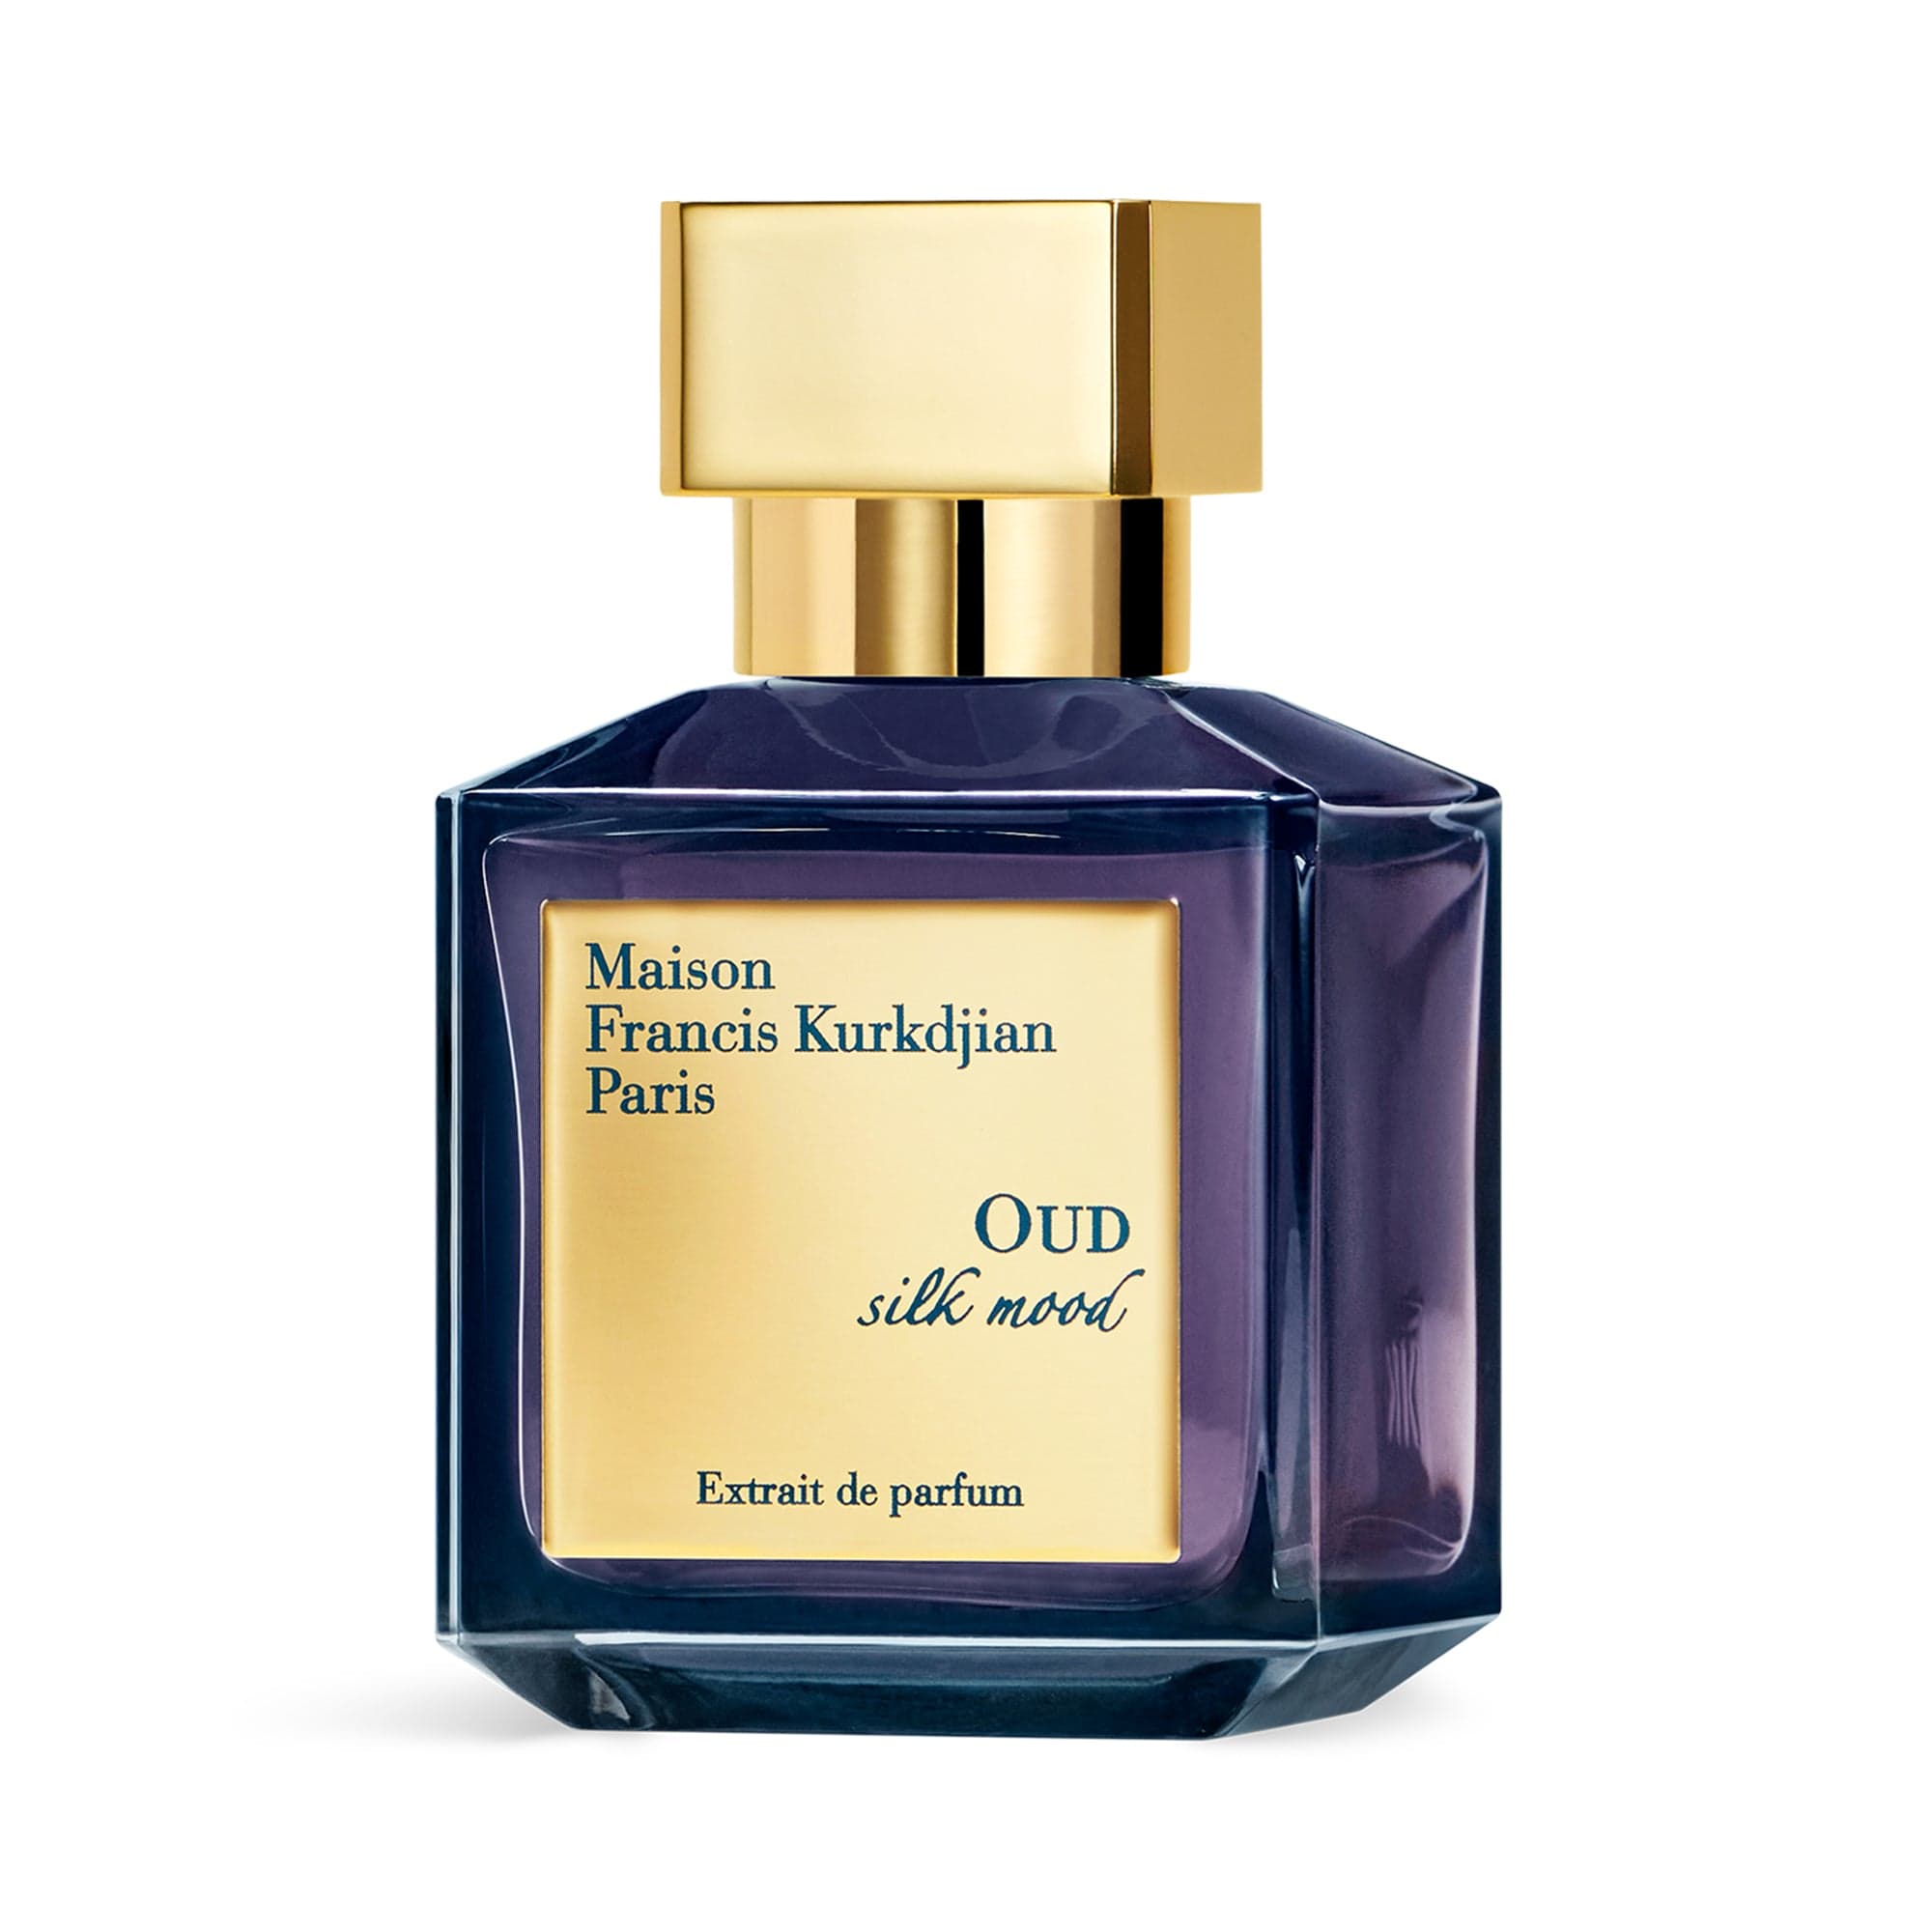 OUD Silk Mood Maison Francis Kurkdjian Perfume Extract